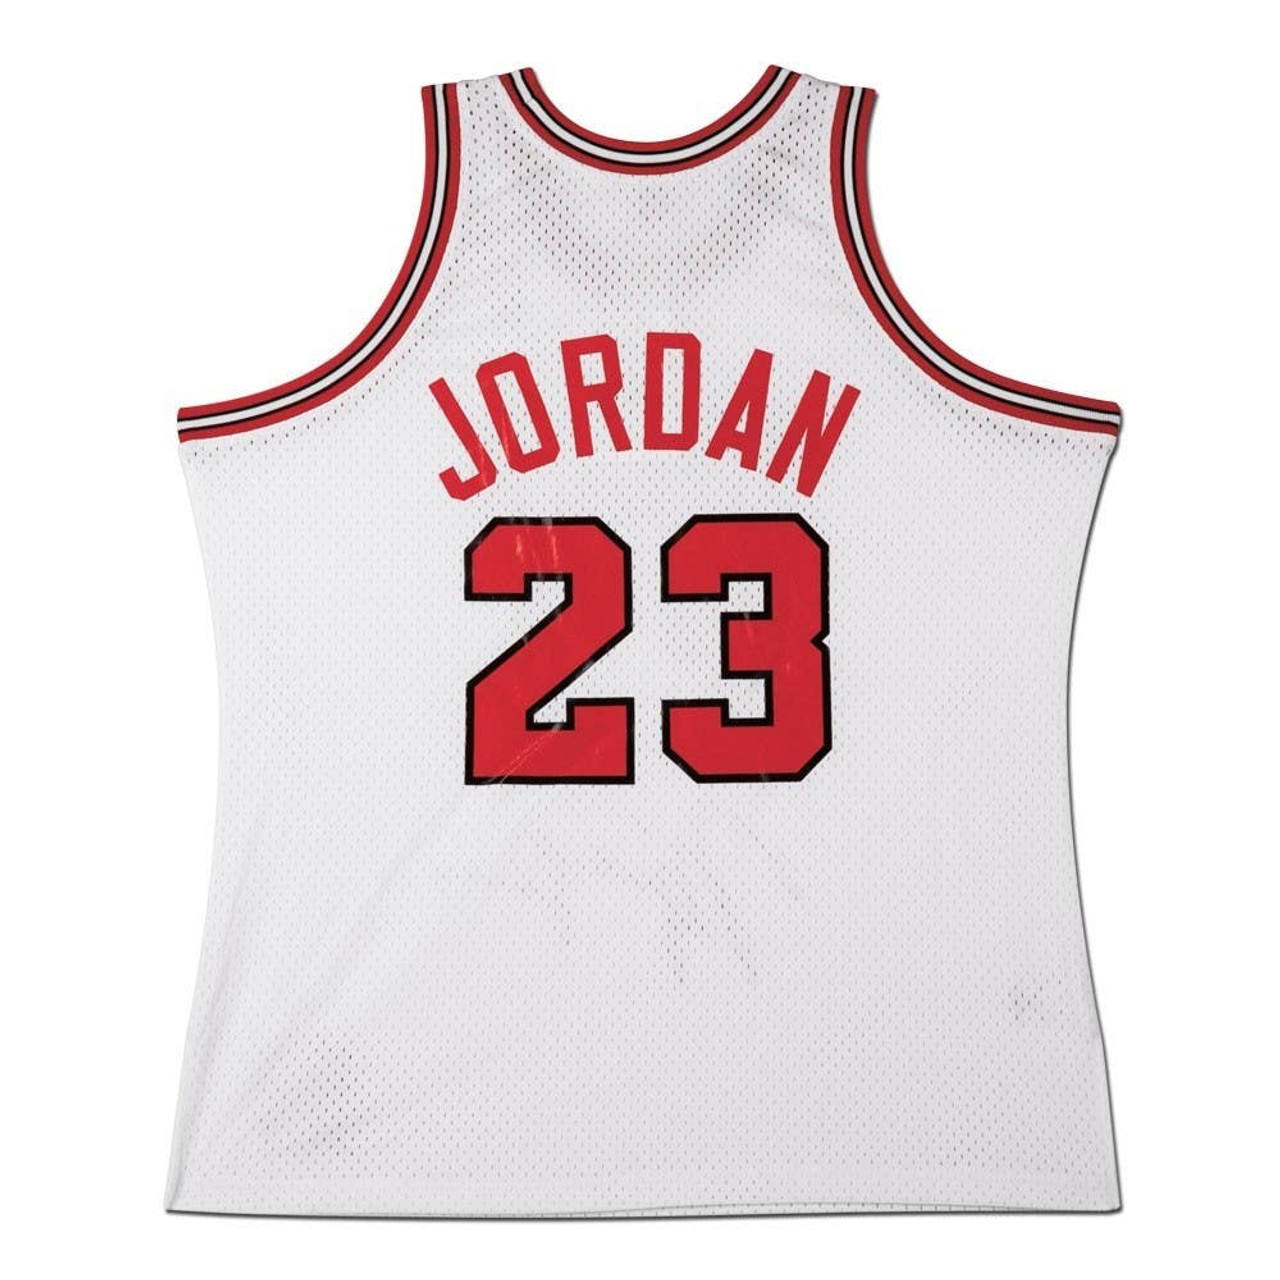 Michael Jordan Team USA Autographed White Jersey - Upper Deck